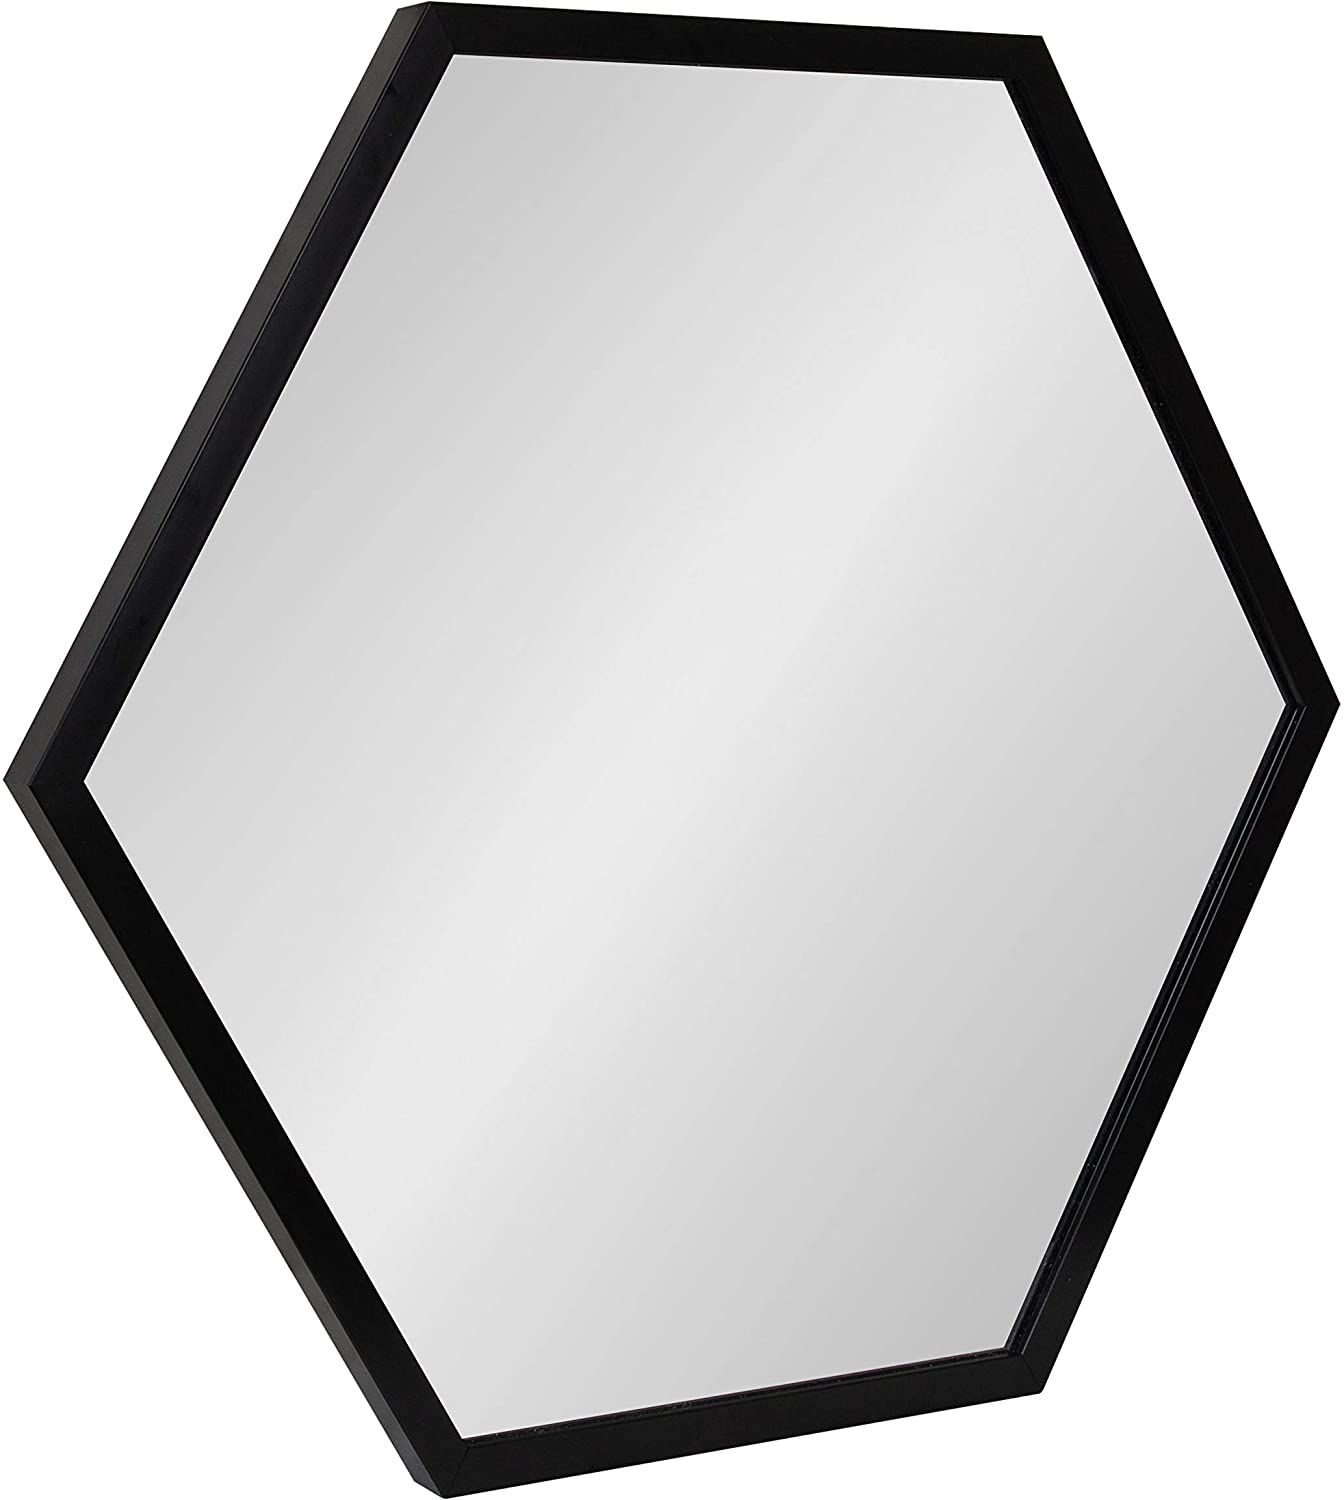 Modern Hexagon Framed Wall Mirror, 14x15, Black, Geometric Wall Decor